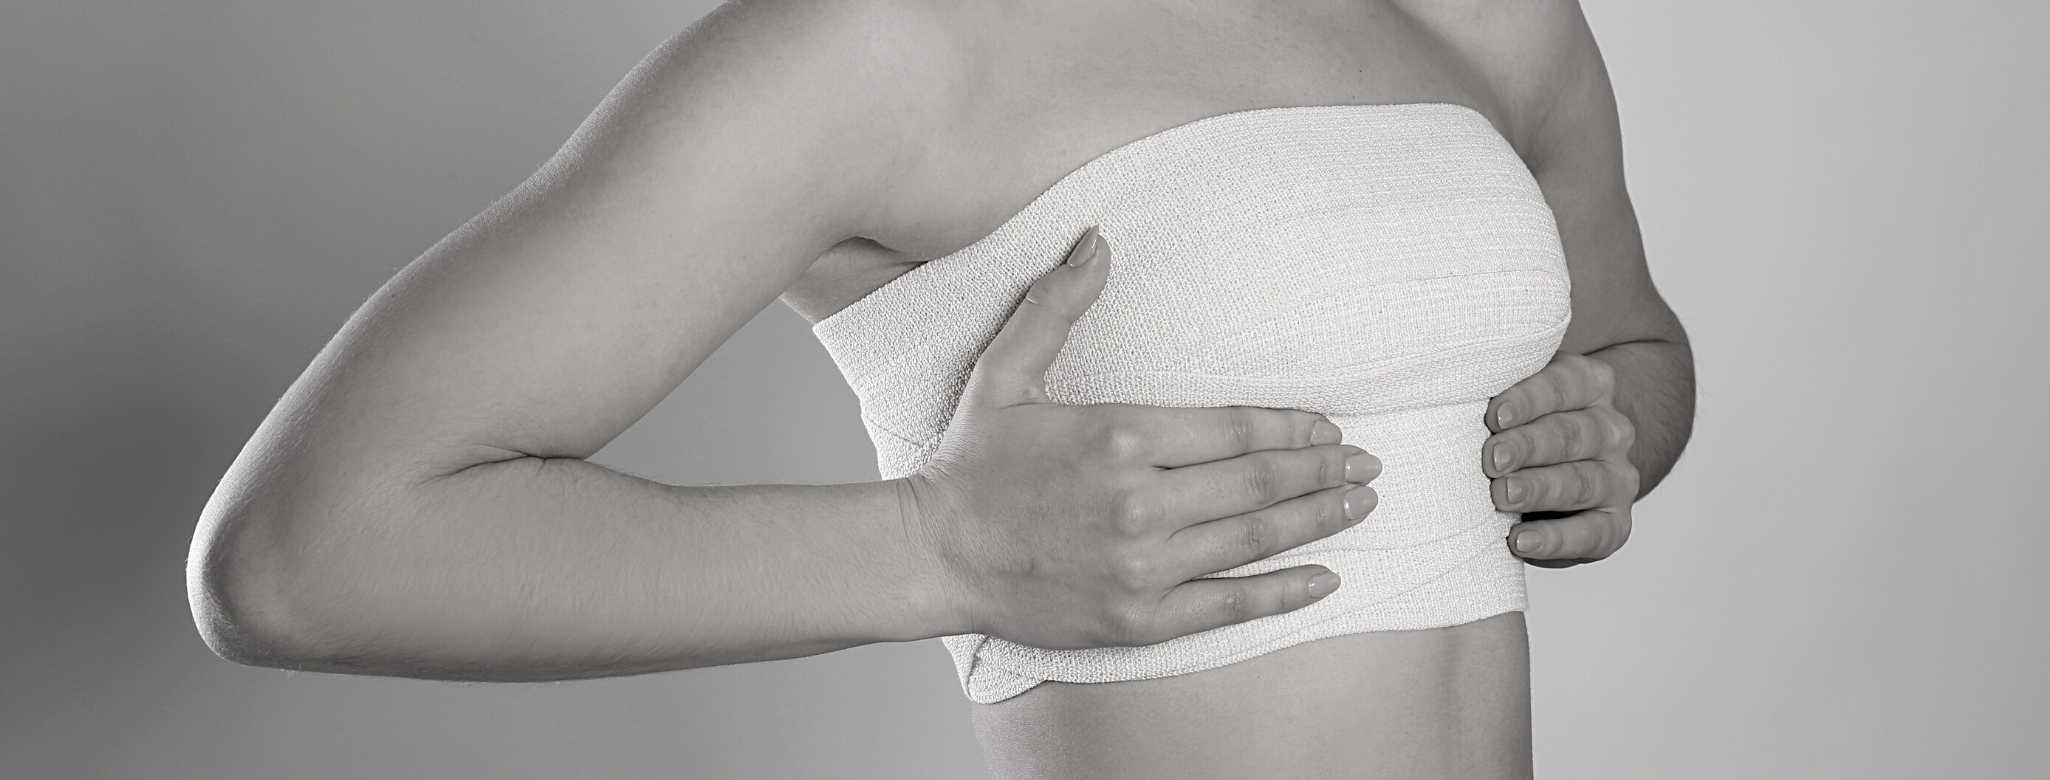 Breast Augmentation Recovery Instructions - Toronto Surgery